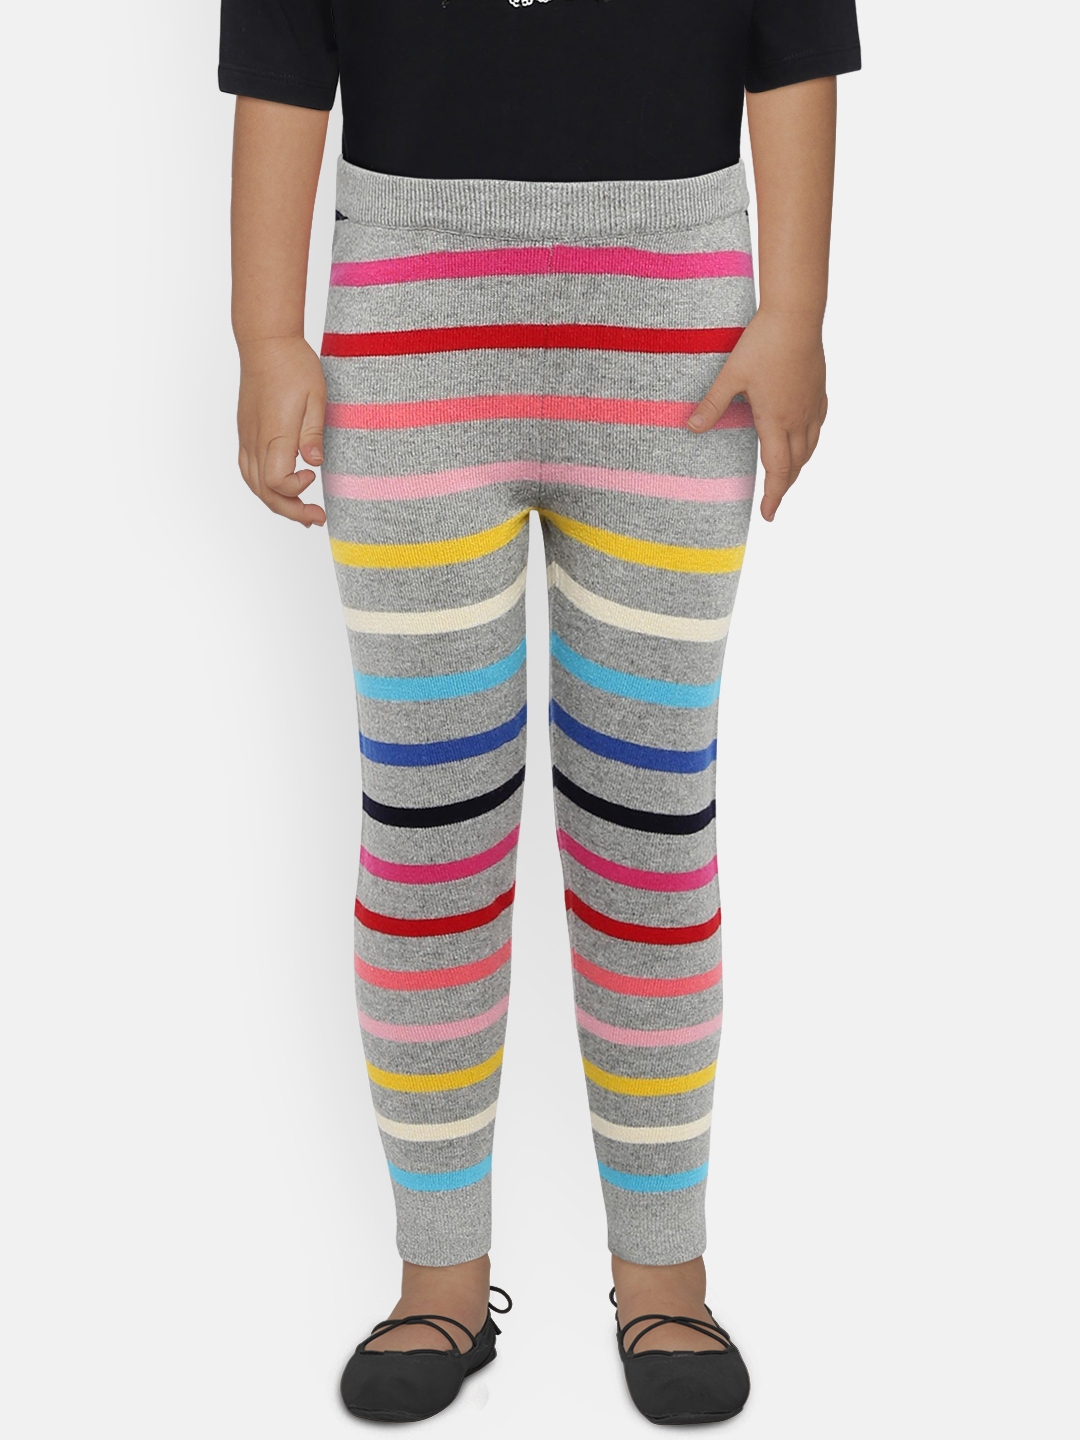 NWT Kids Gap Girls leggings pants rainbow striped XXL 14-16